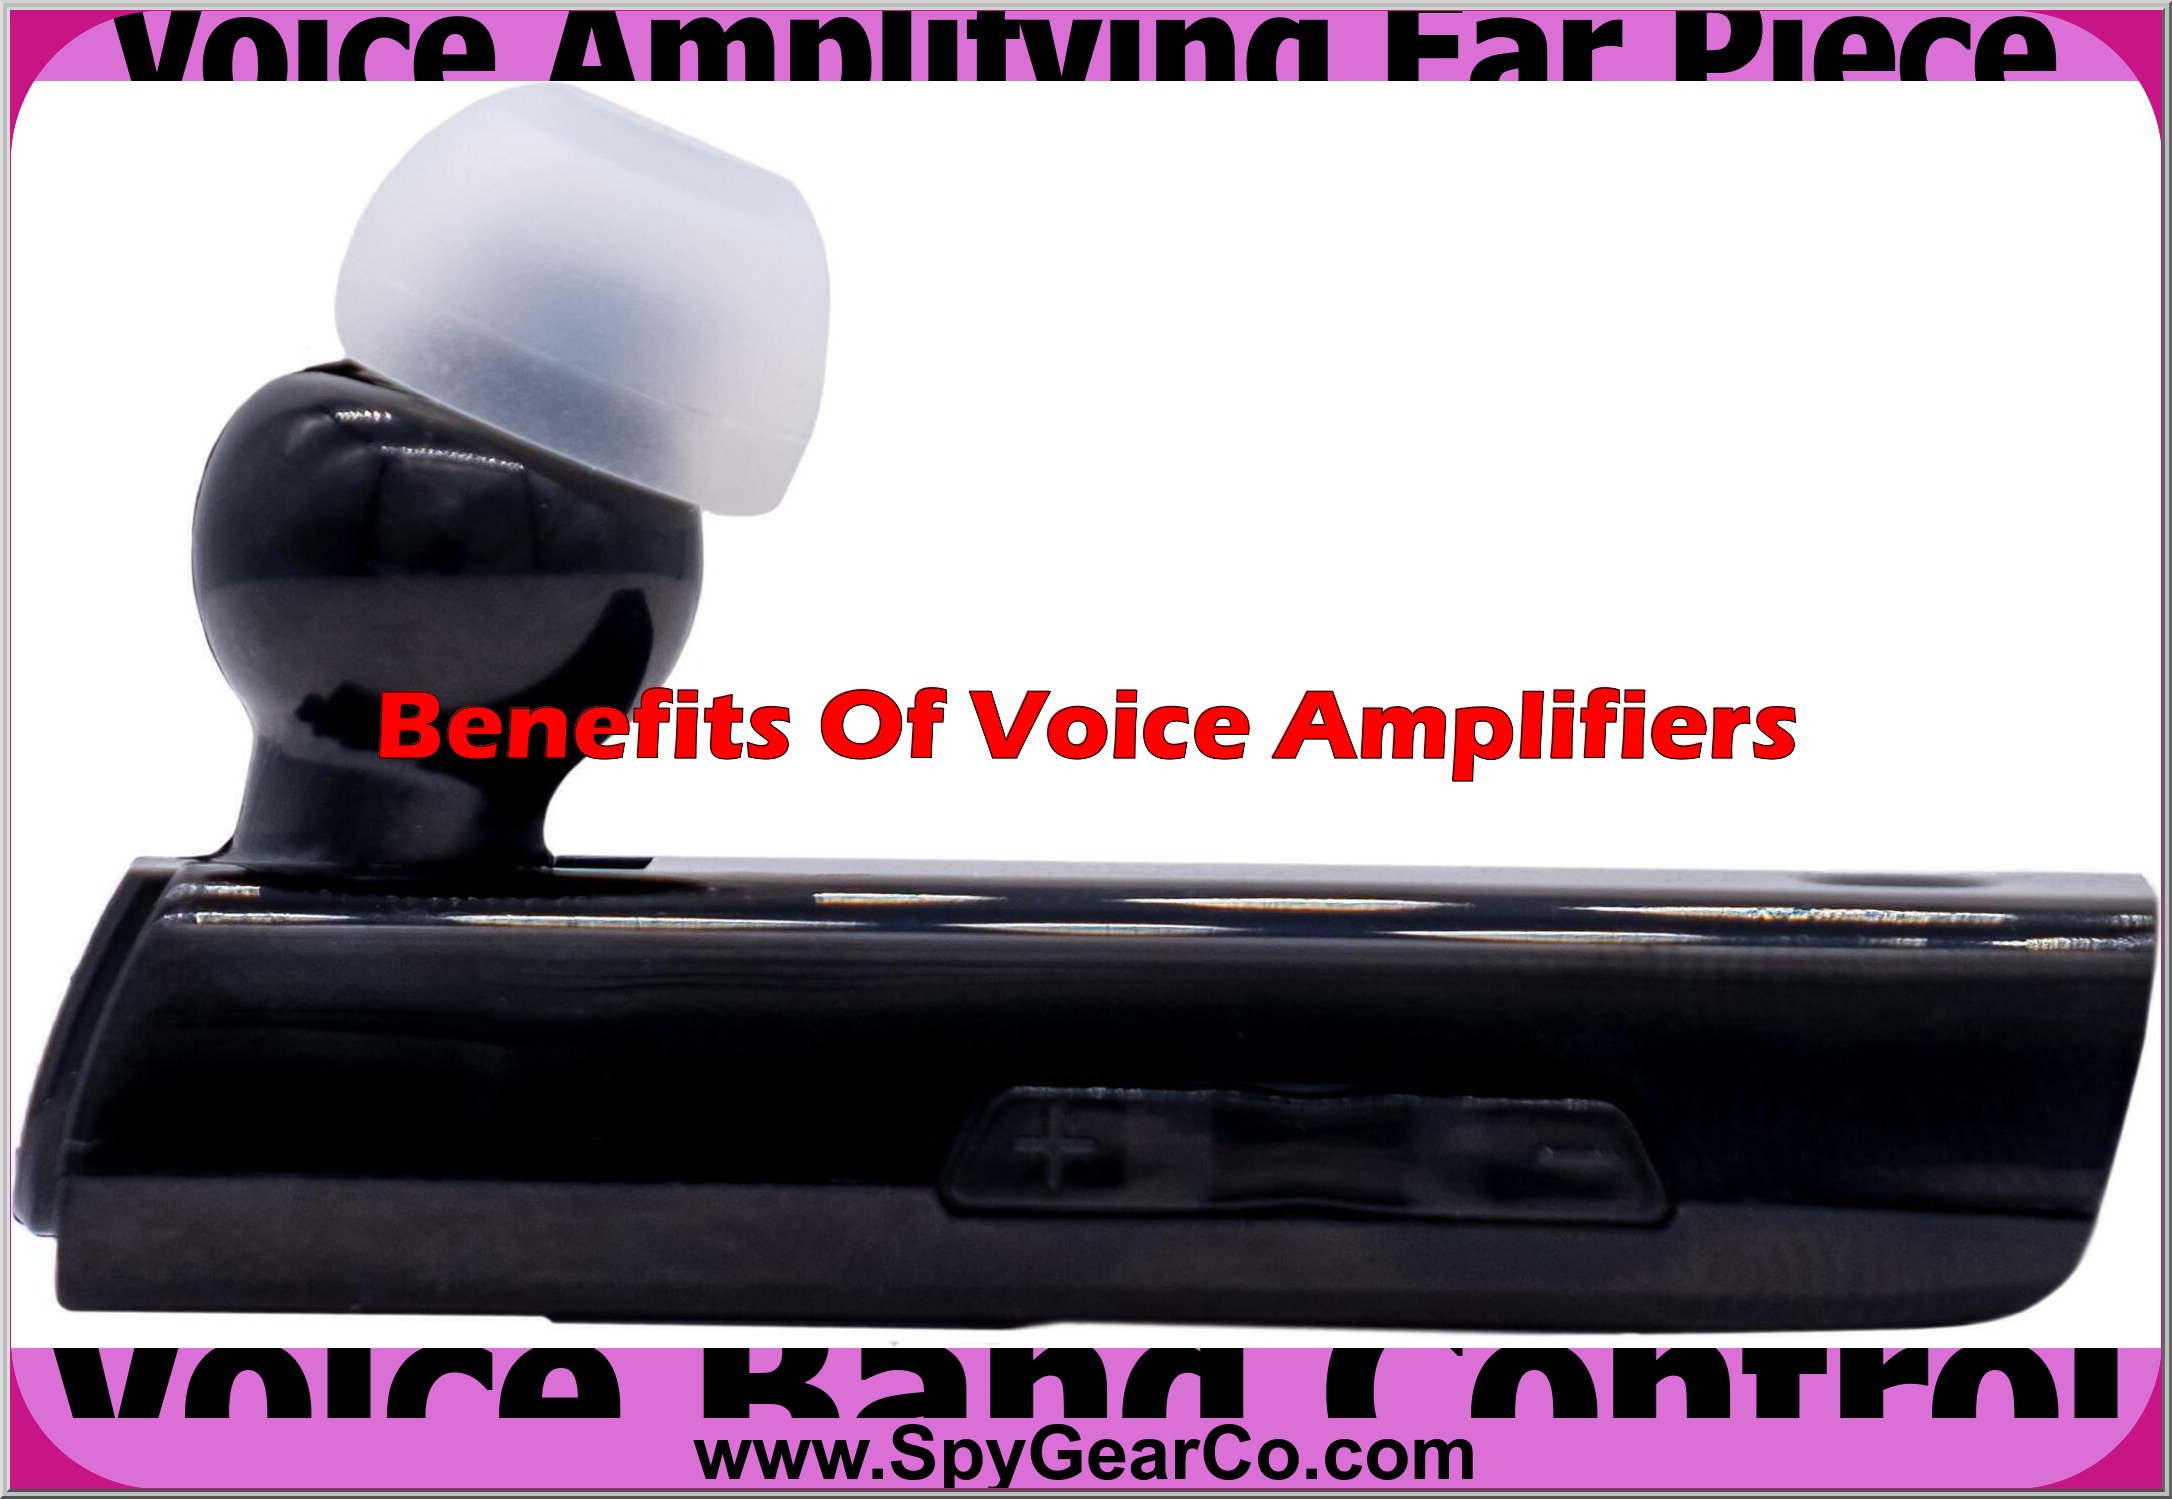 Voice Amplifying Ear Piece